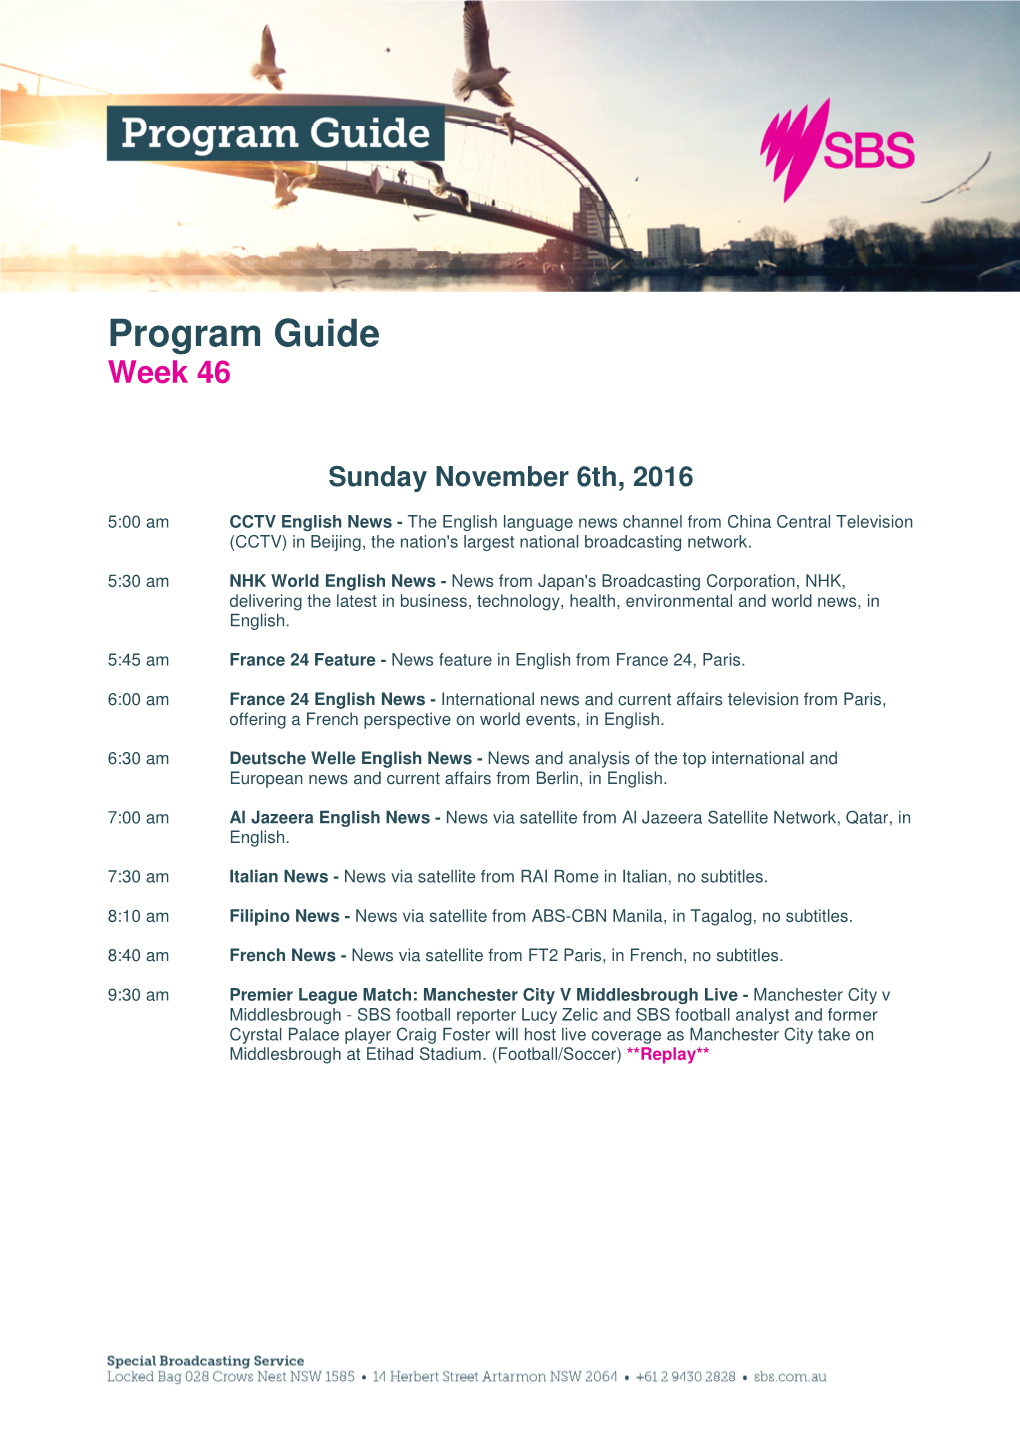 Program Guide Week 46